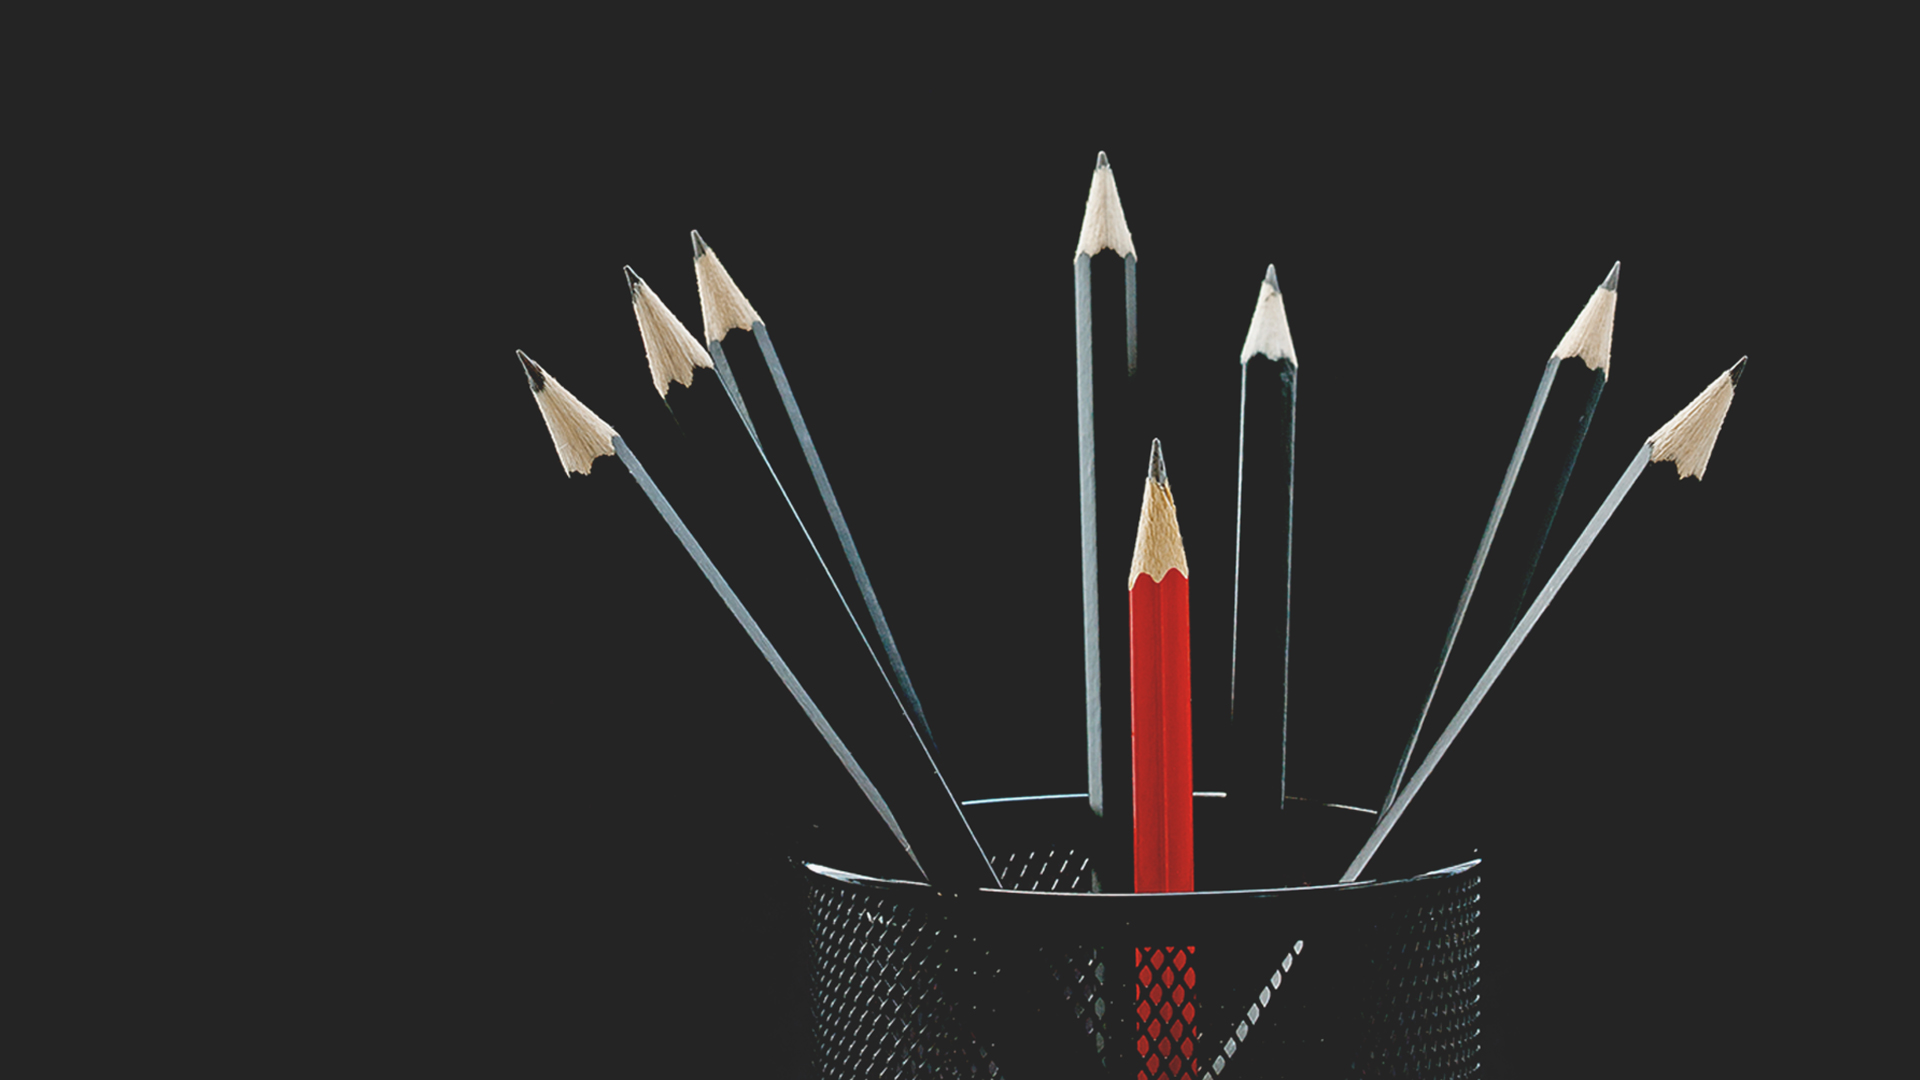 Red pencil amongst black pencils